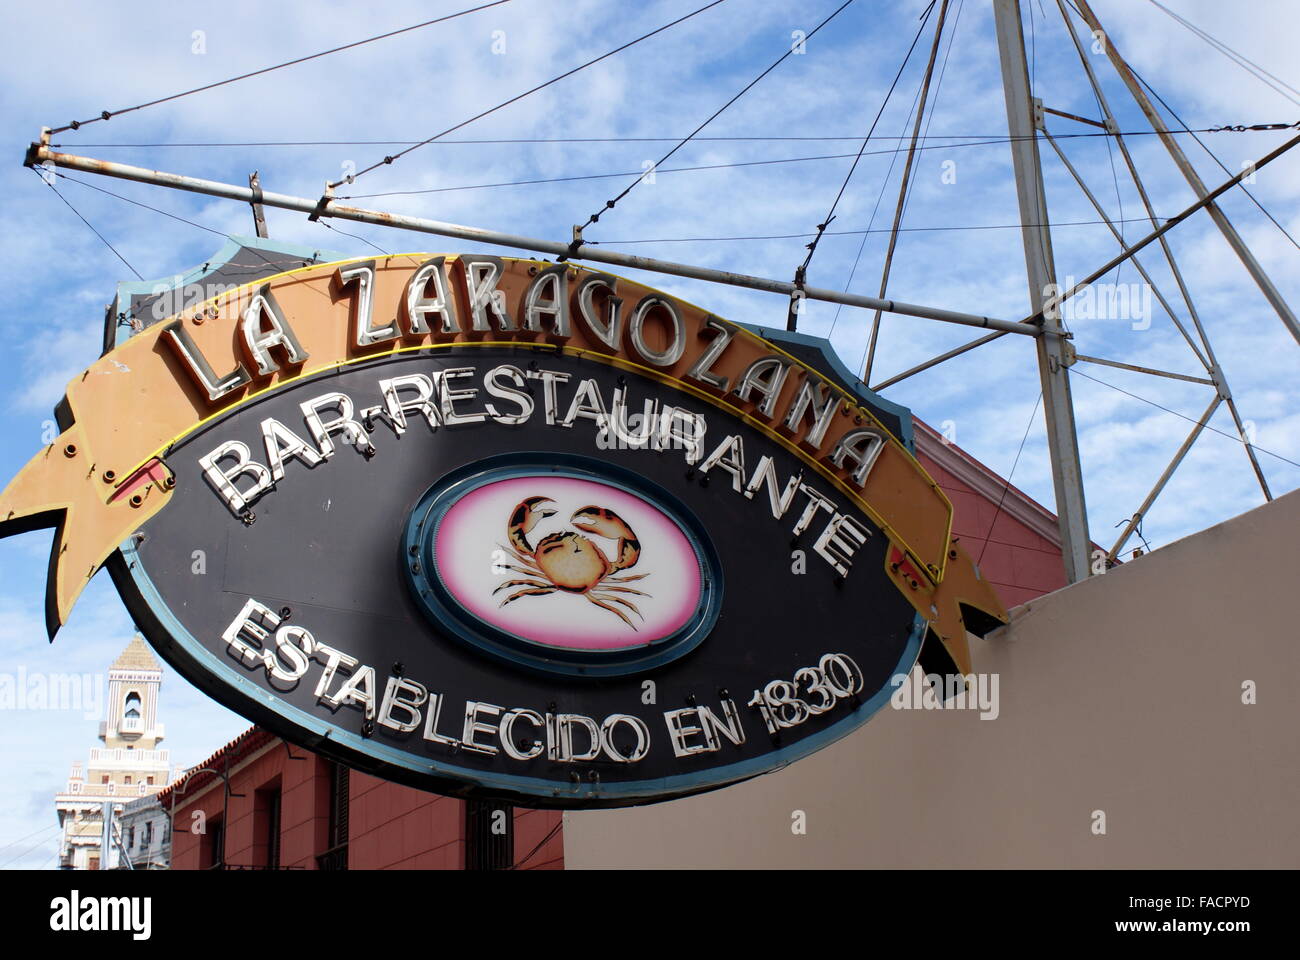 La Zaragozana bar-restaurant sign, Havana, Cuba Stock Photo - Alamy